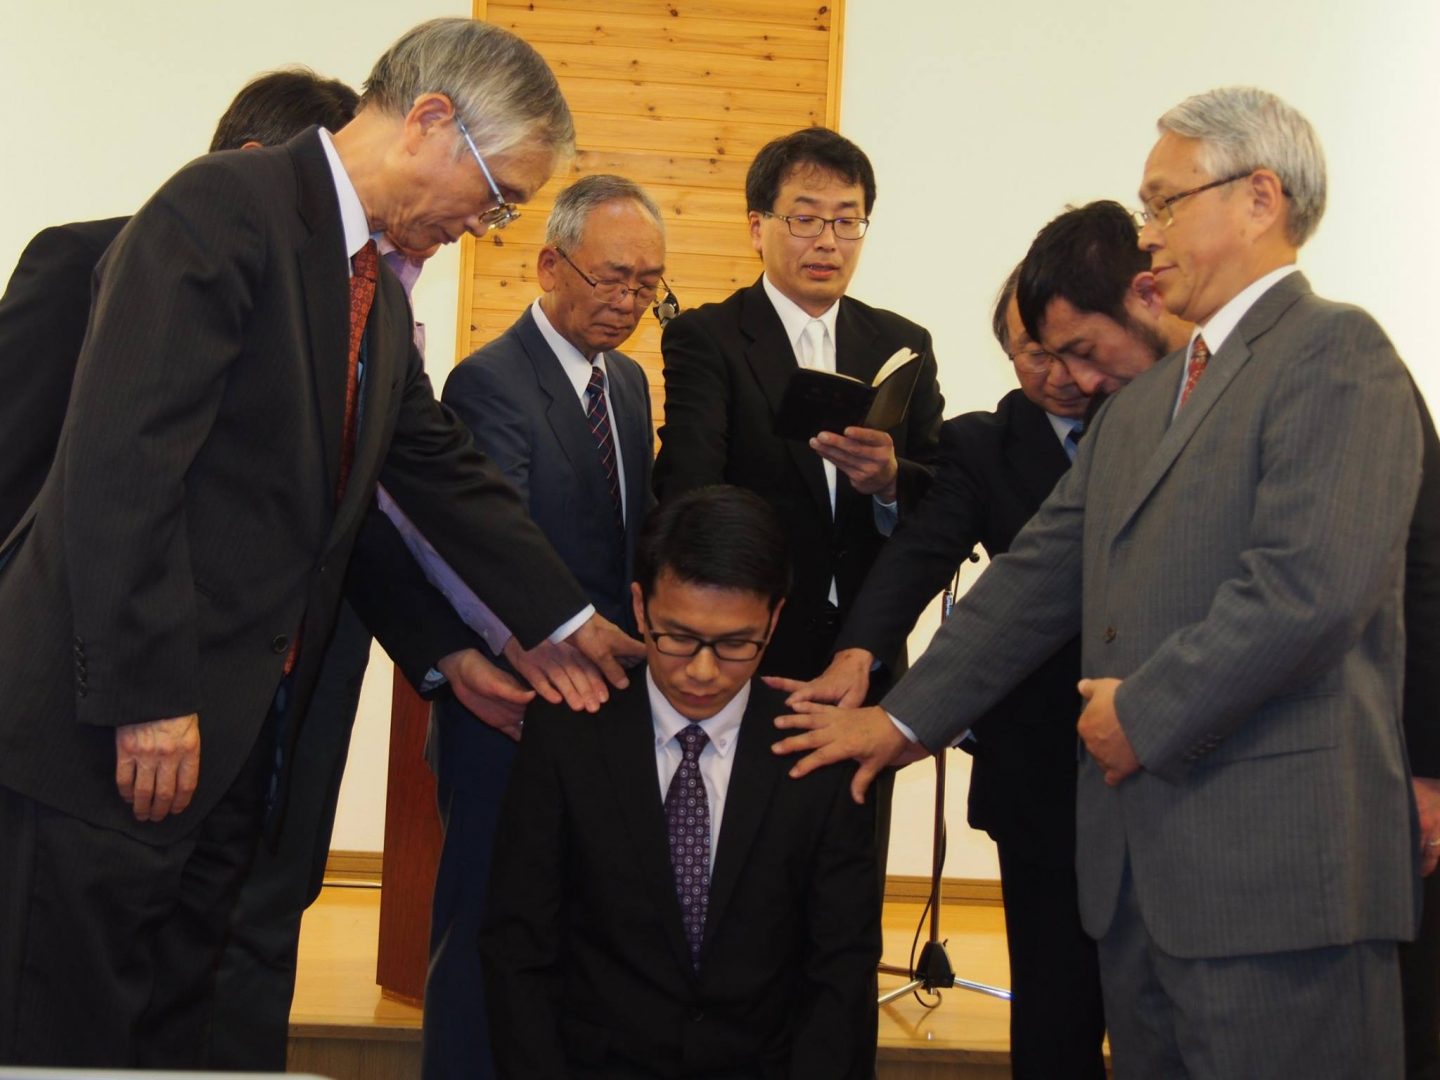 Pastor Tak (kneeling) being installed as the senior pastor of Sapporo Minami Evangelical Christ Church in October 2015, with Pastor Yasuji Honda (standing, second from left).